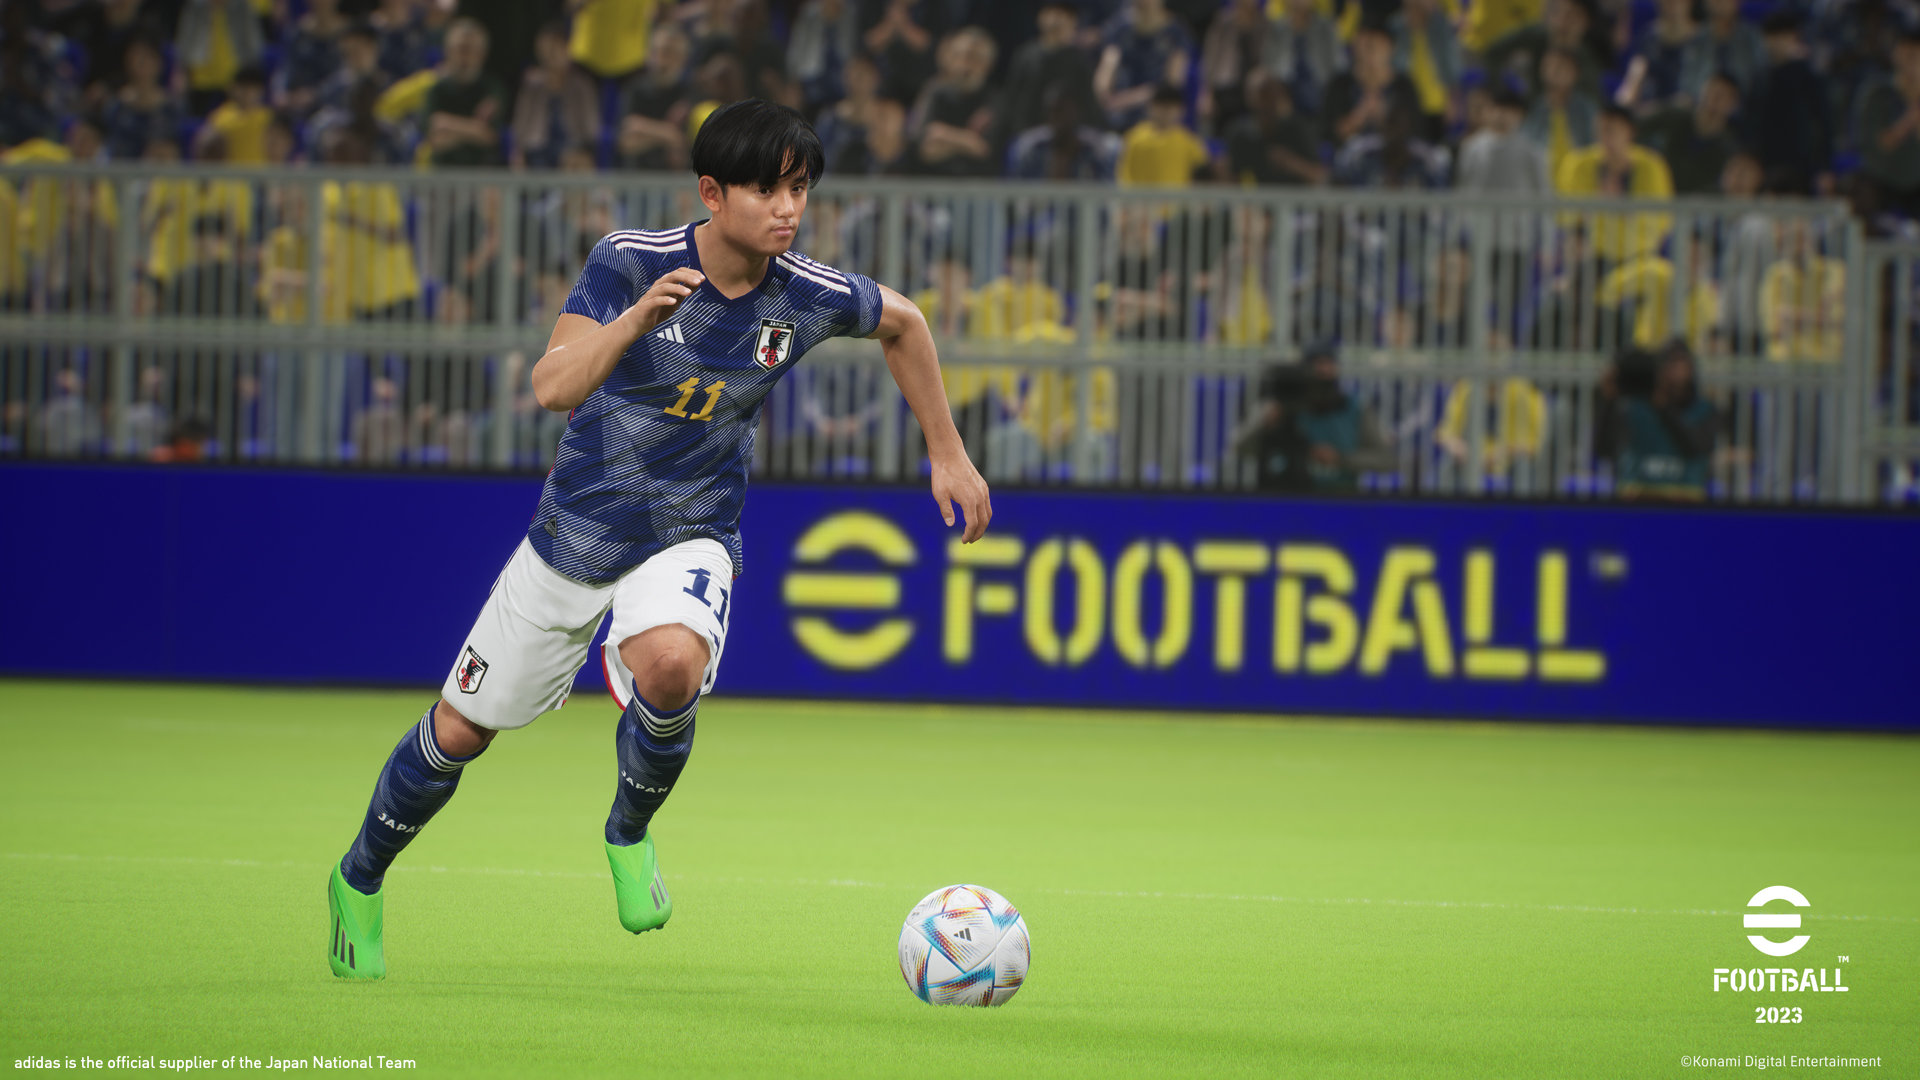 Efootball に サッカー日本代表 22 ユニフォーム を着用した選手が本日より登場 ゲーム内チャレンジイベントなども開催